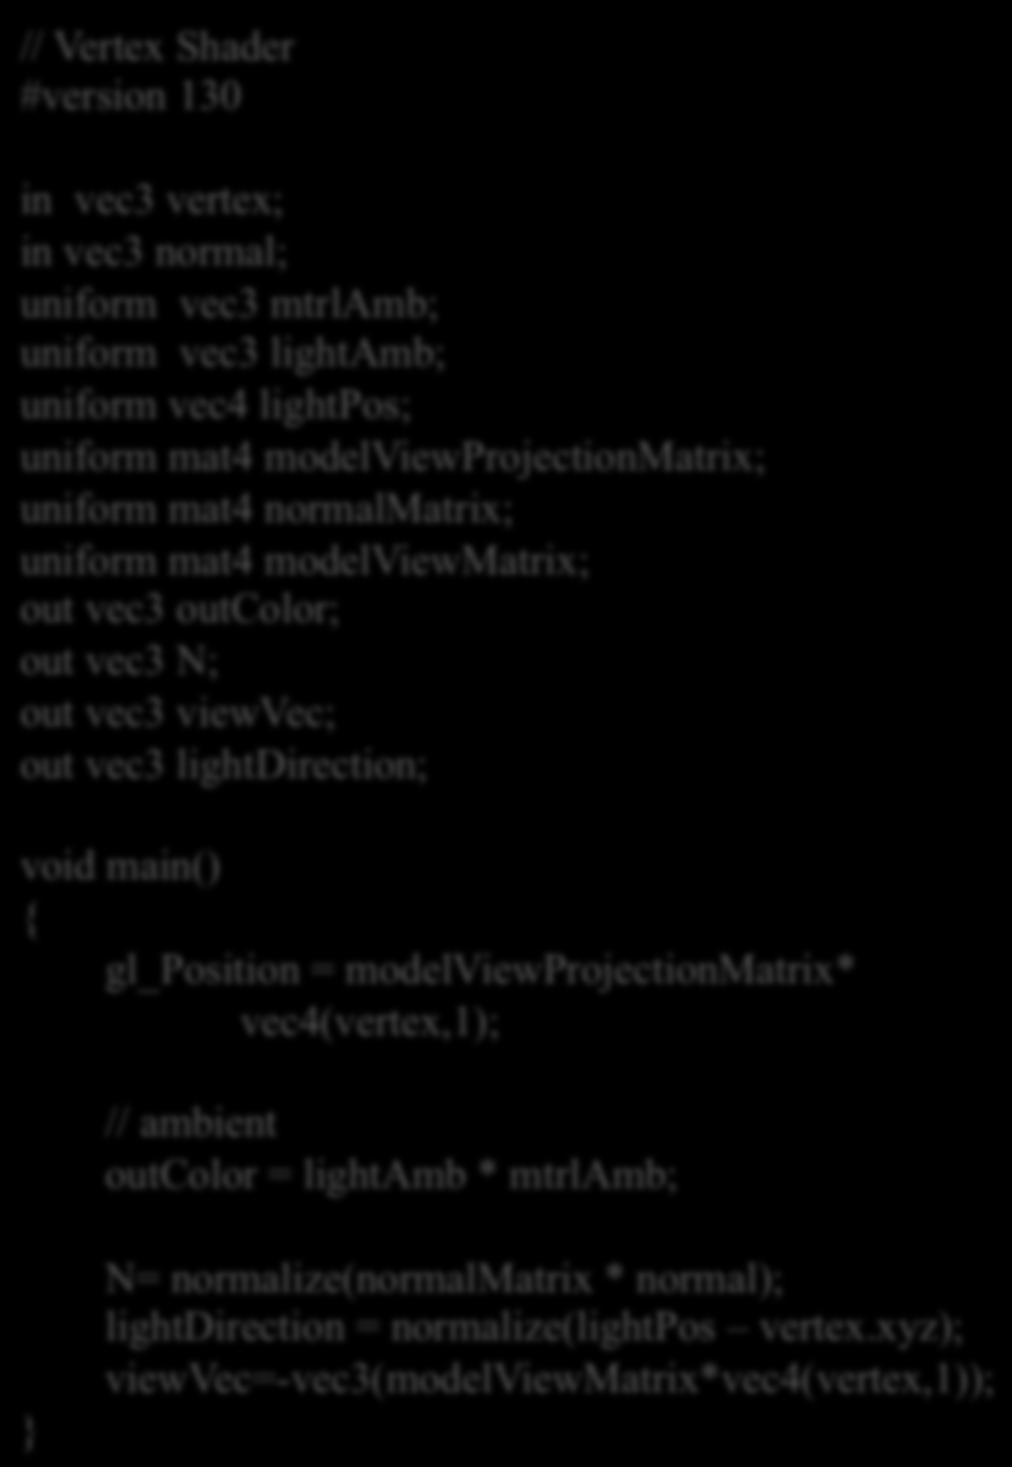 modelviewprojectionmatrix* vec4(vertex,1); } // ambient outcolor = lightamb * mtrlamb; N= normalize(normalmatrix * normal); lightdirection = normalize(lightpos vertex.